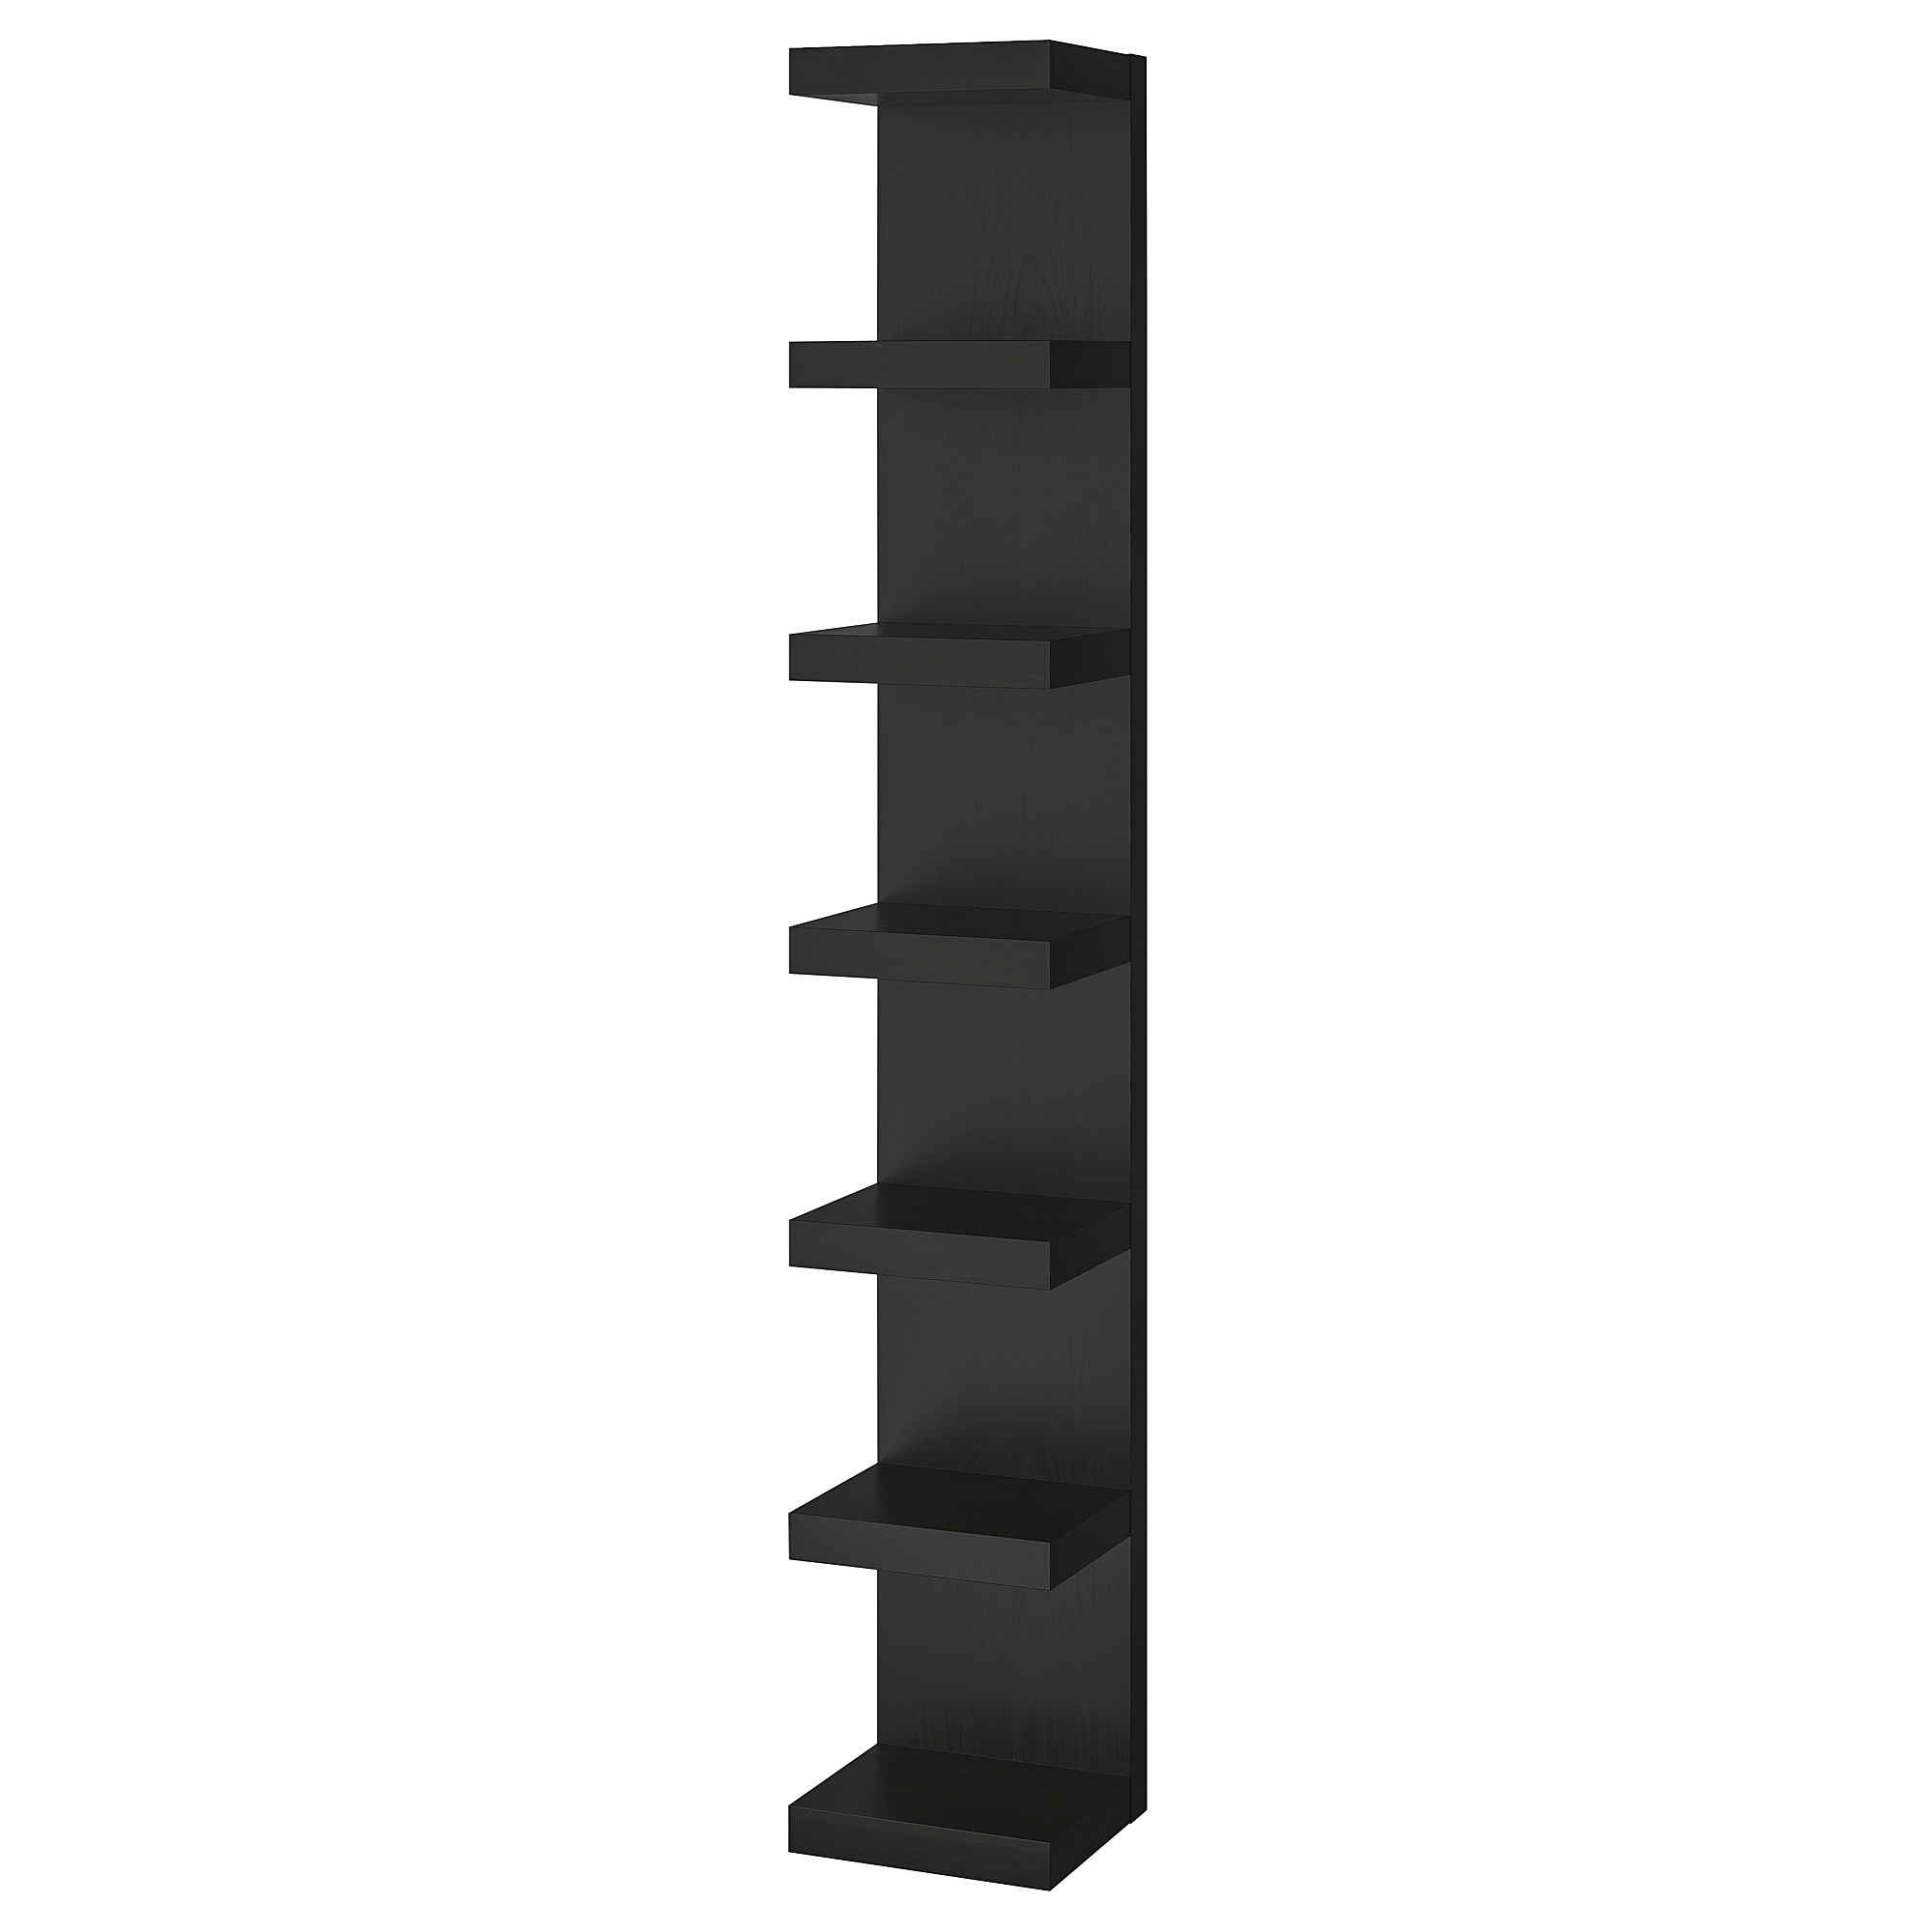 LACK wall shelf unit